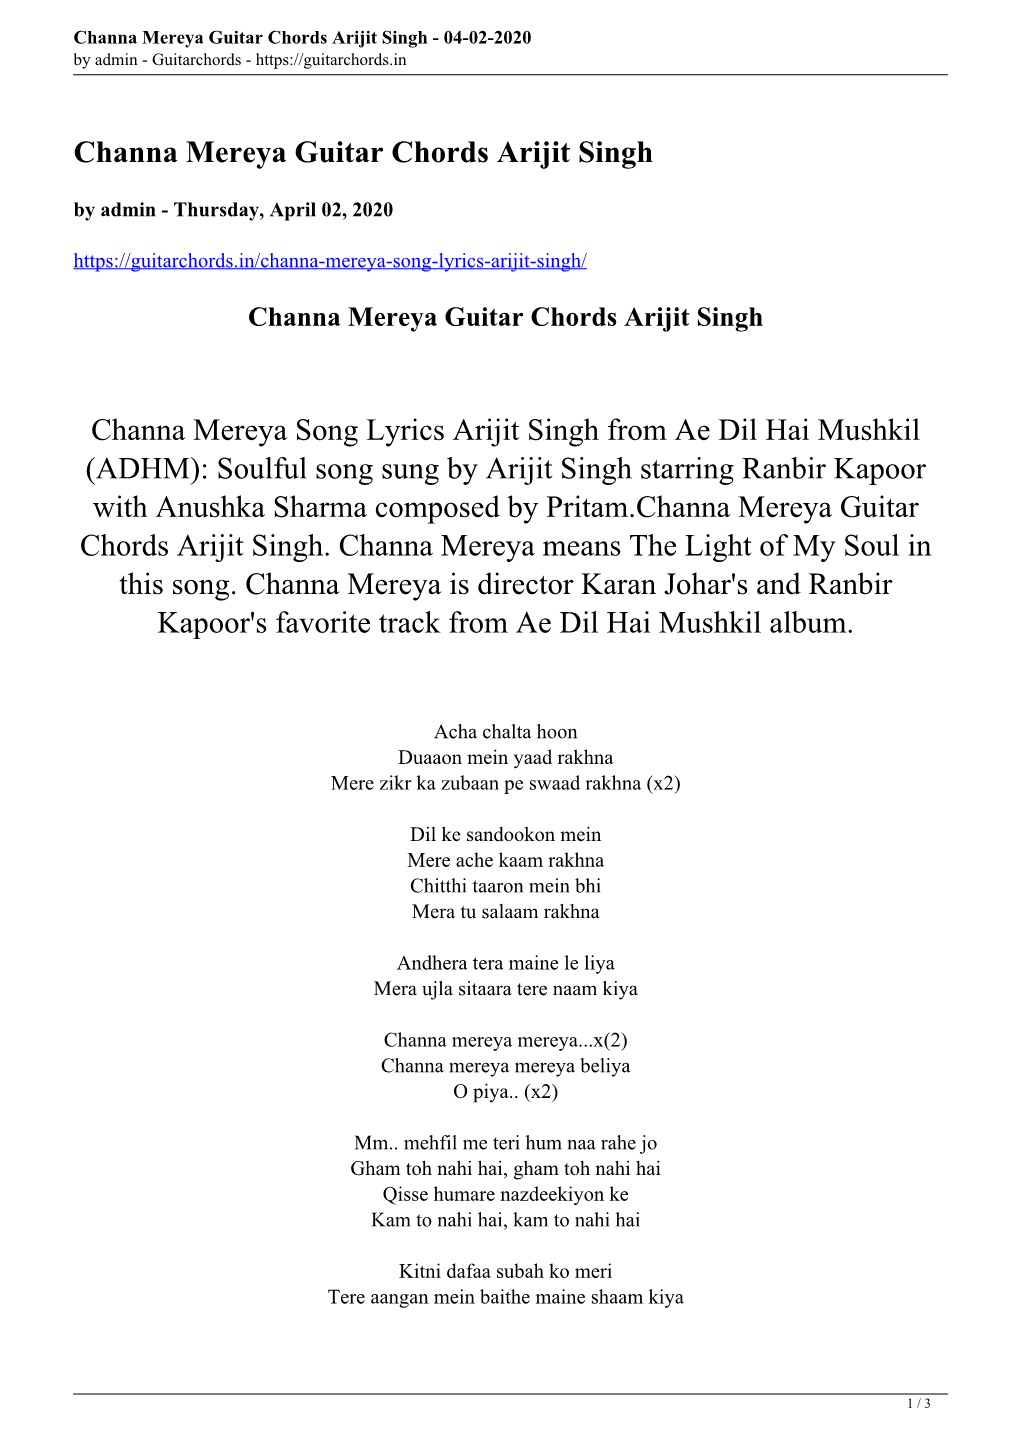 Channa Mereya Guitar Chords Arijit Singh - 04-02-2020 by Admin - Guitarchords